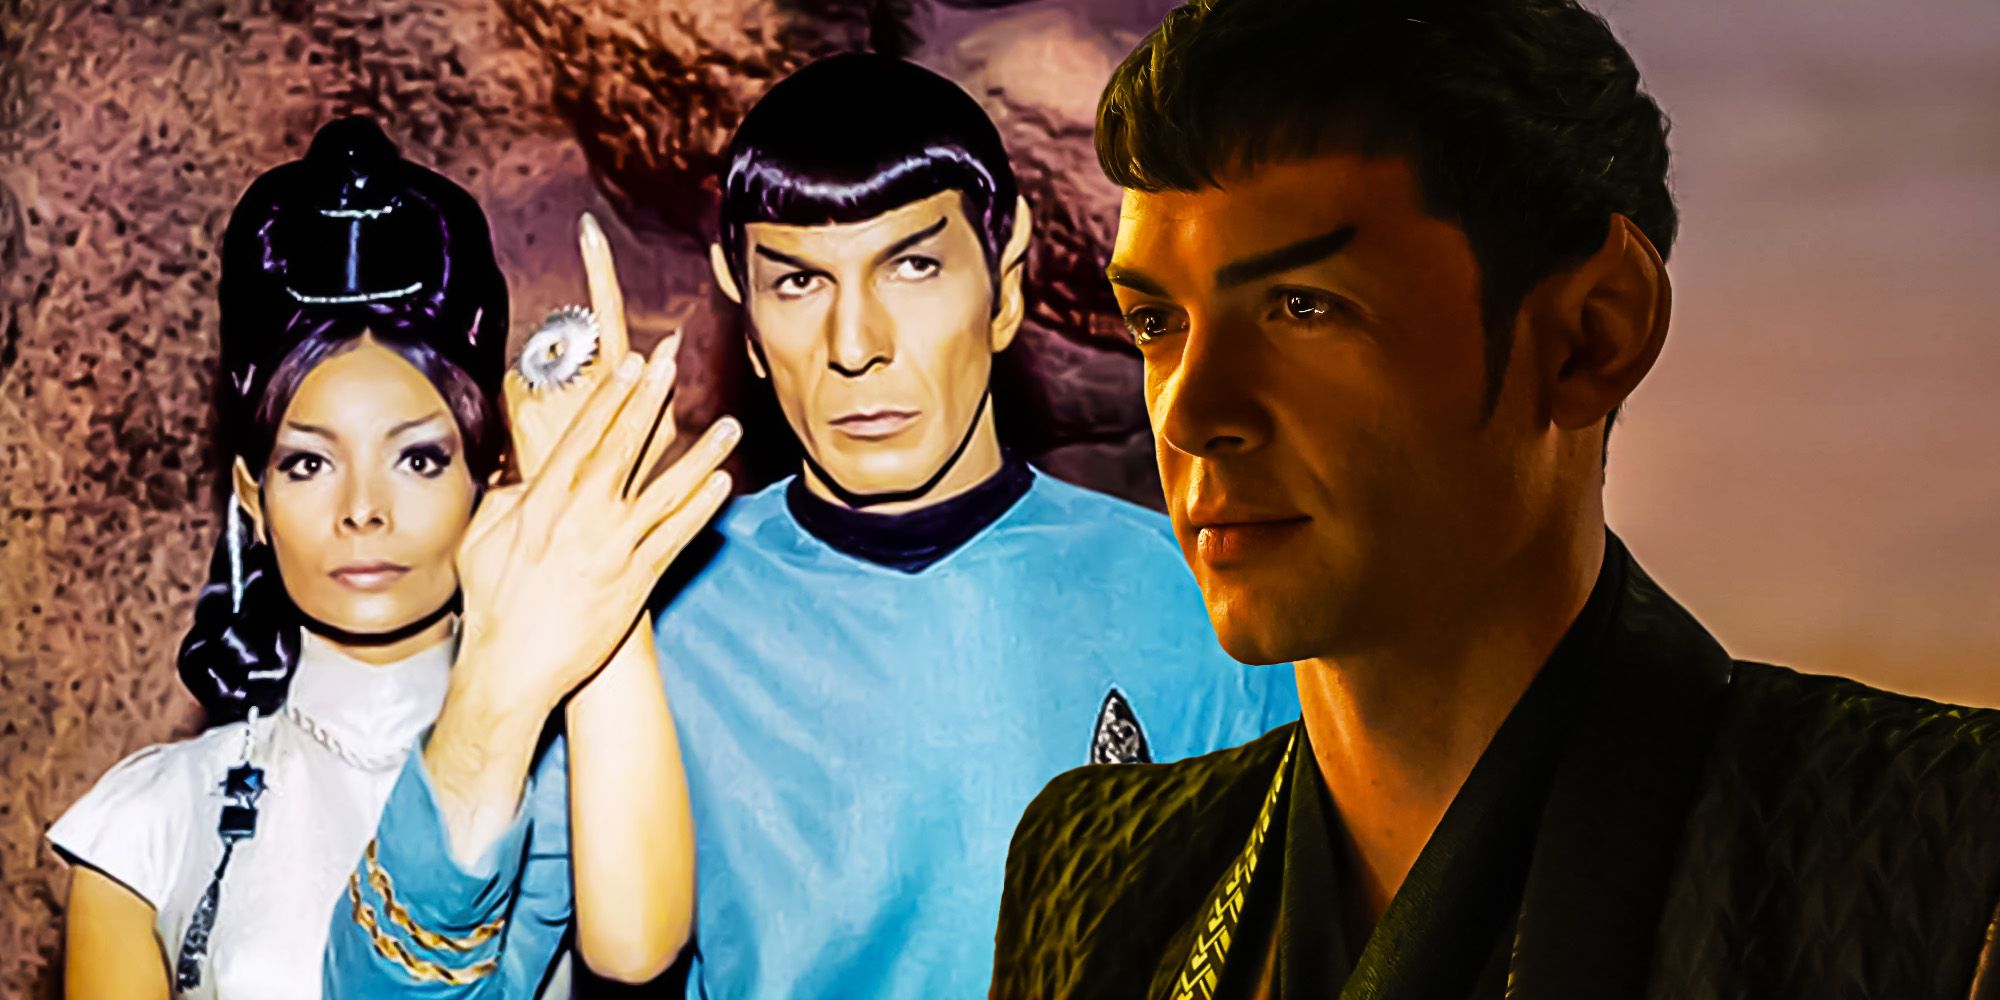 Strange new worlds Spock Tpring the original series